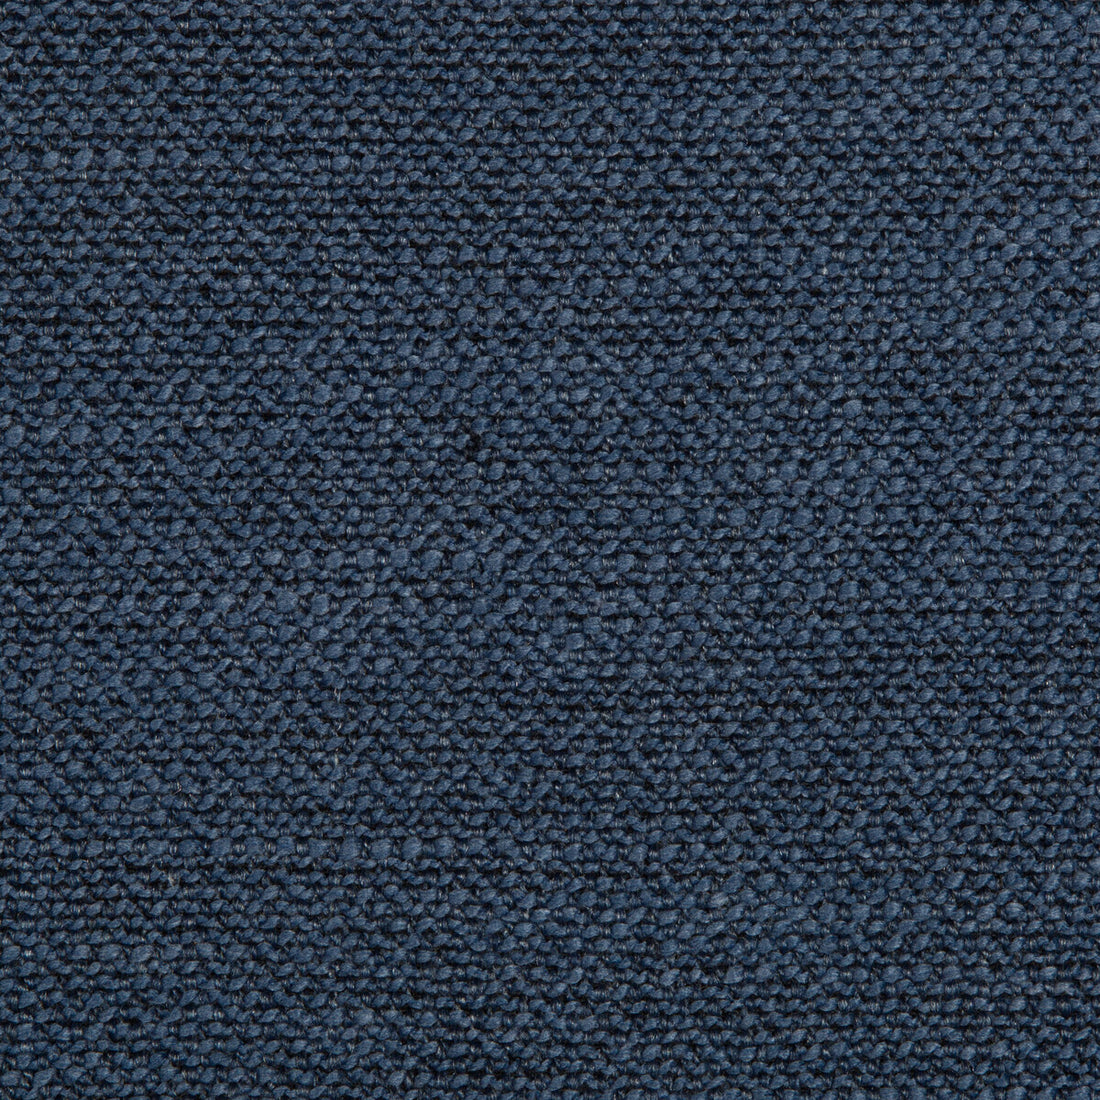 Kravet Smart fabric in 35379-50 color - pattern 35379.50.0 - by Kravet Smart in the Performance Kravetarmor collection